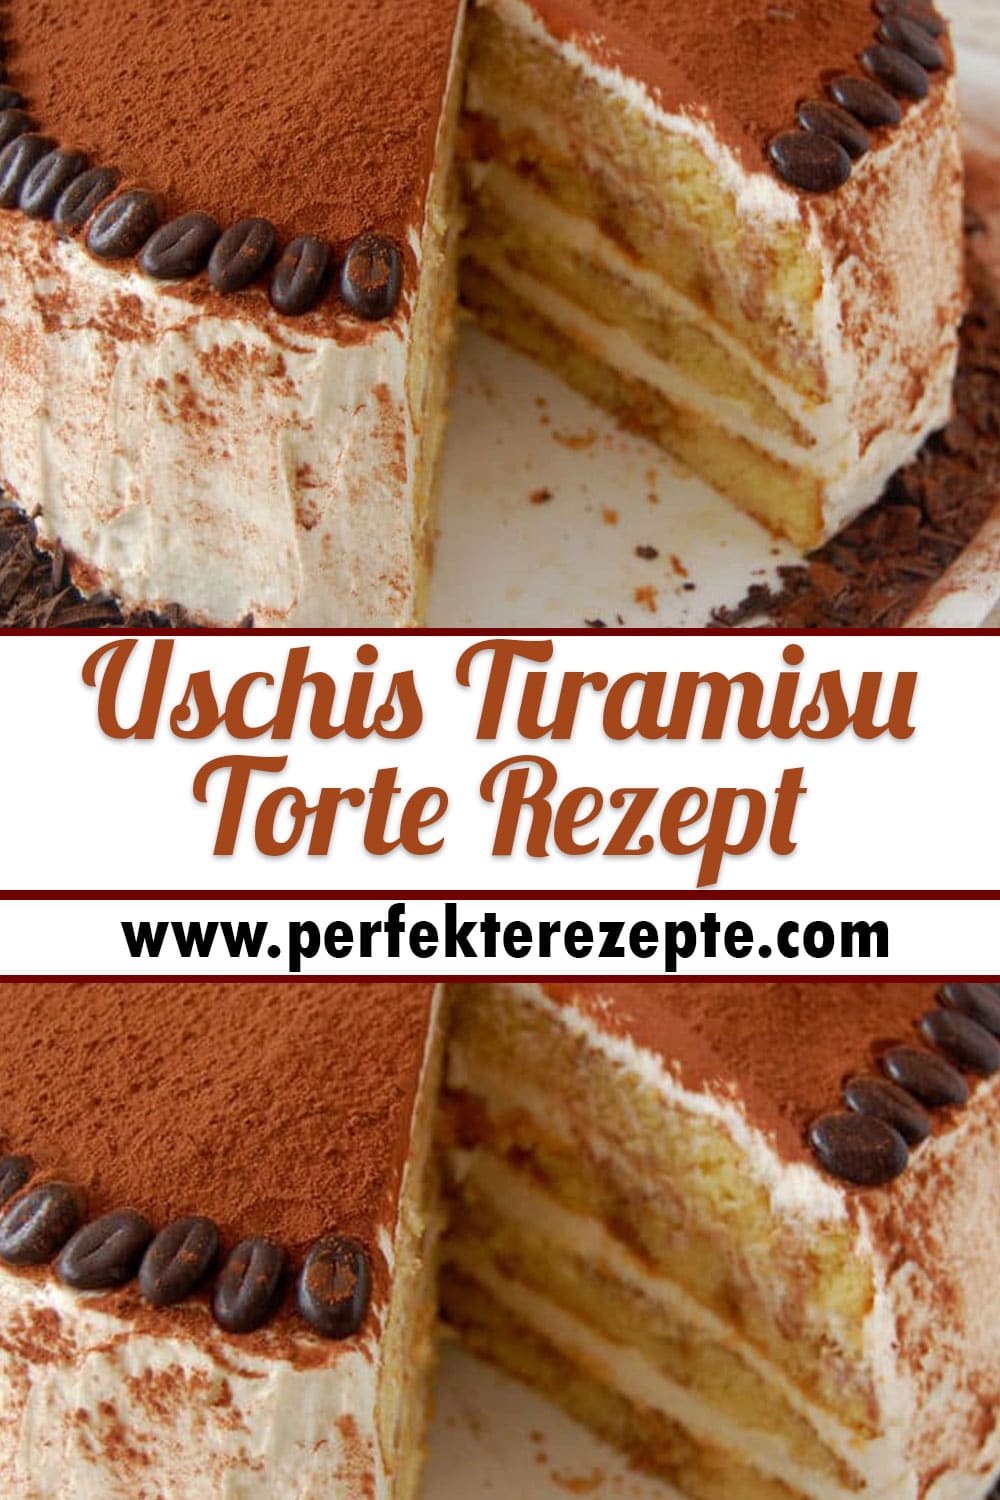 Uschis Tiramisu-Torte Rezept